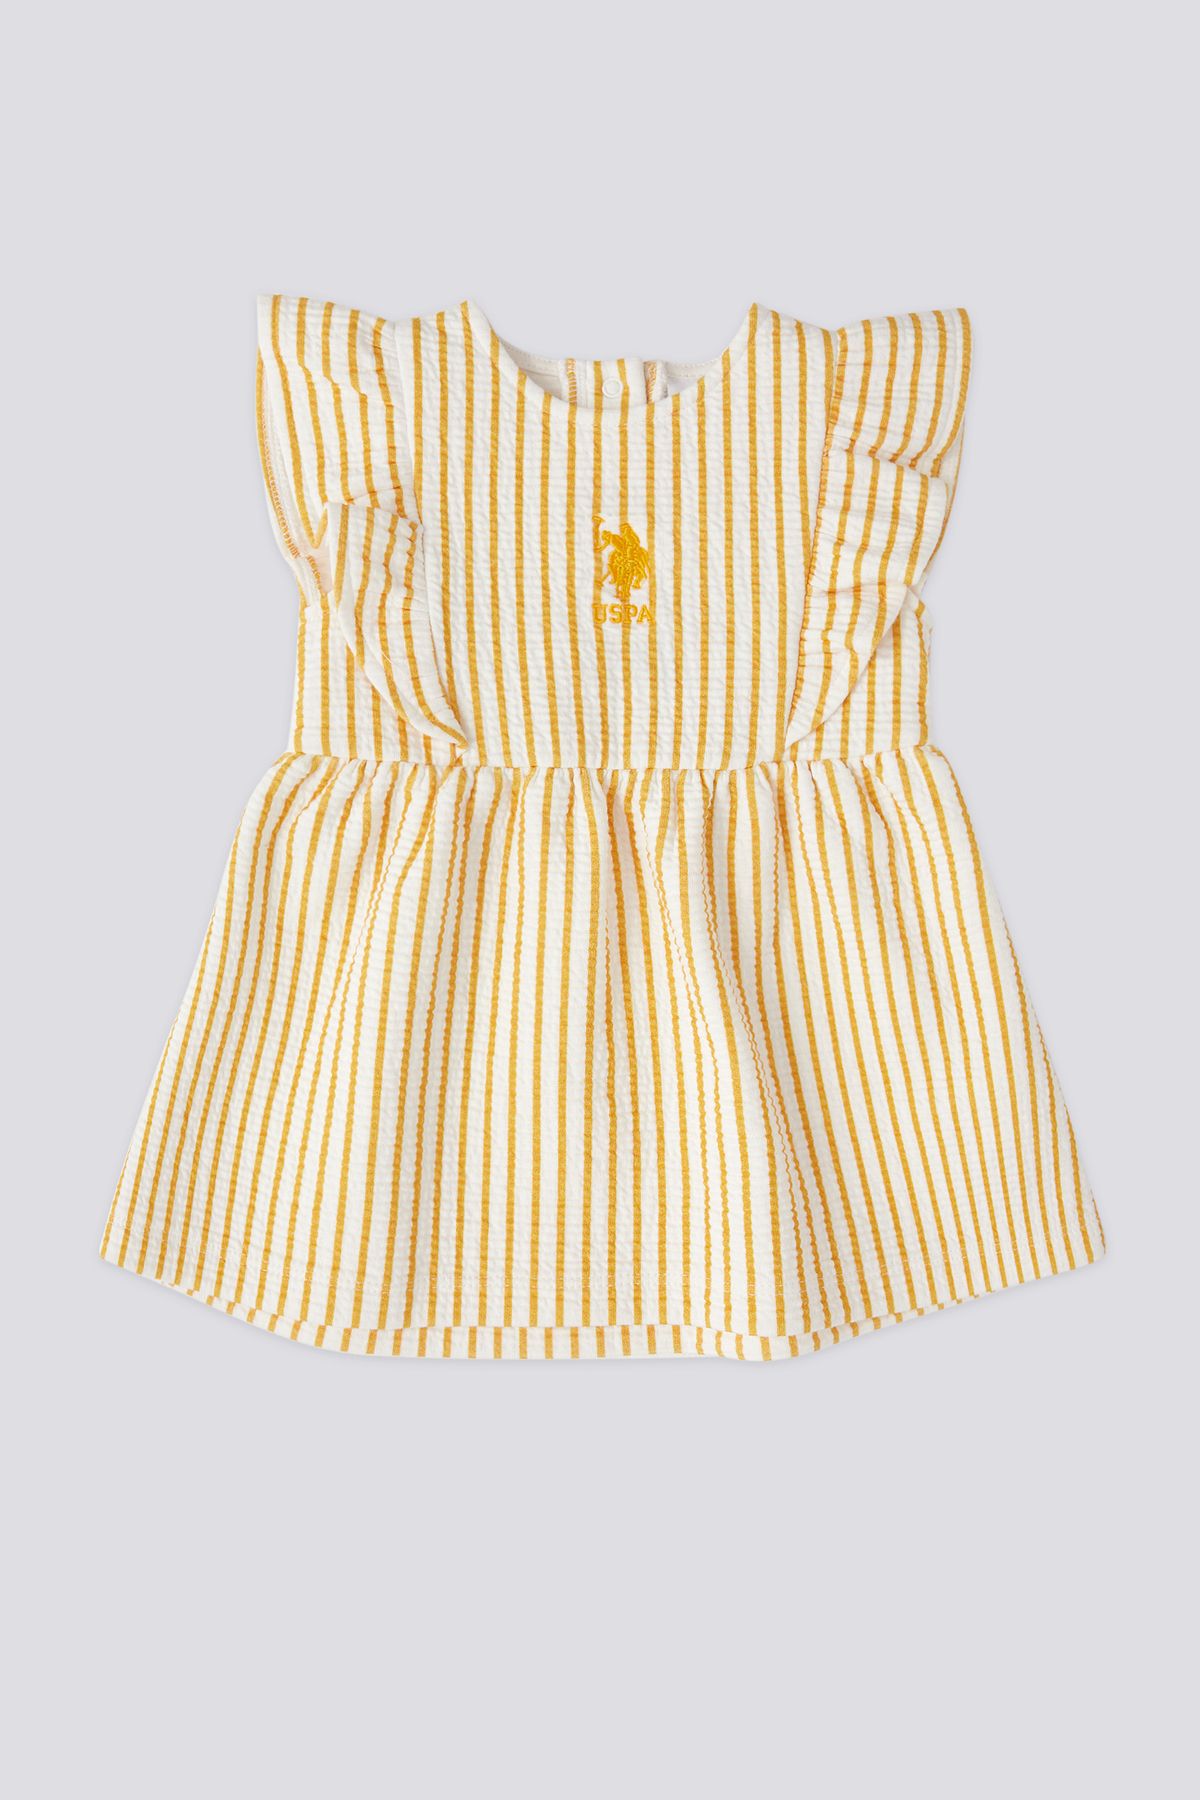 U.S. Polo Assn. U.S. Polo Assn. Kız Bebek Çizgili Elbise Sarı USB1981